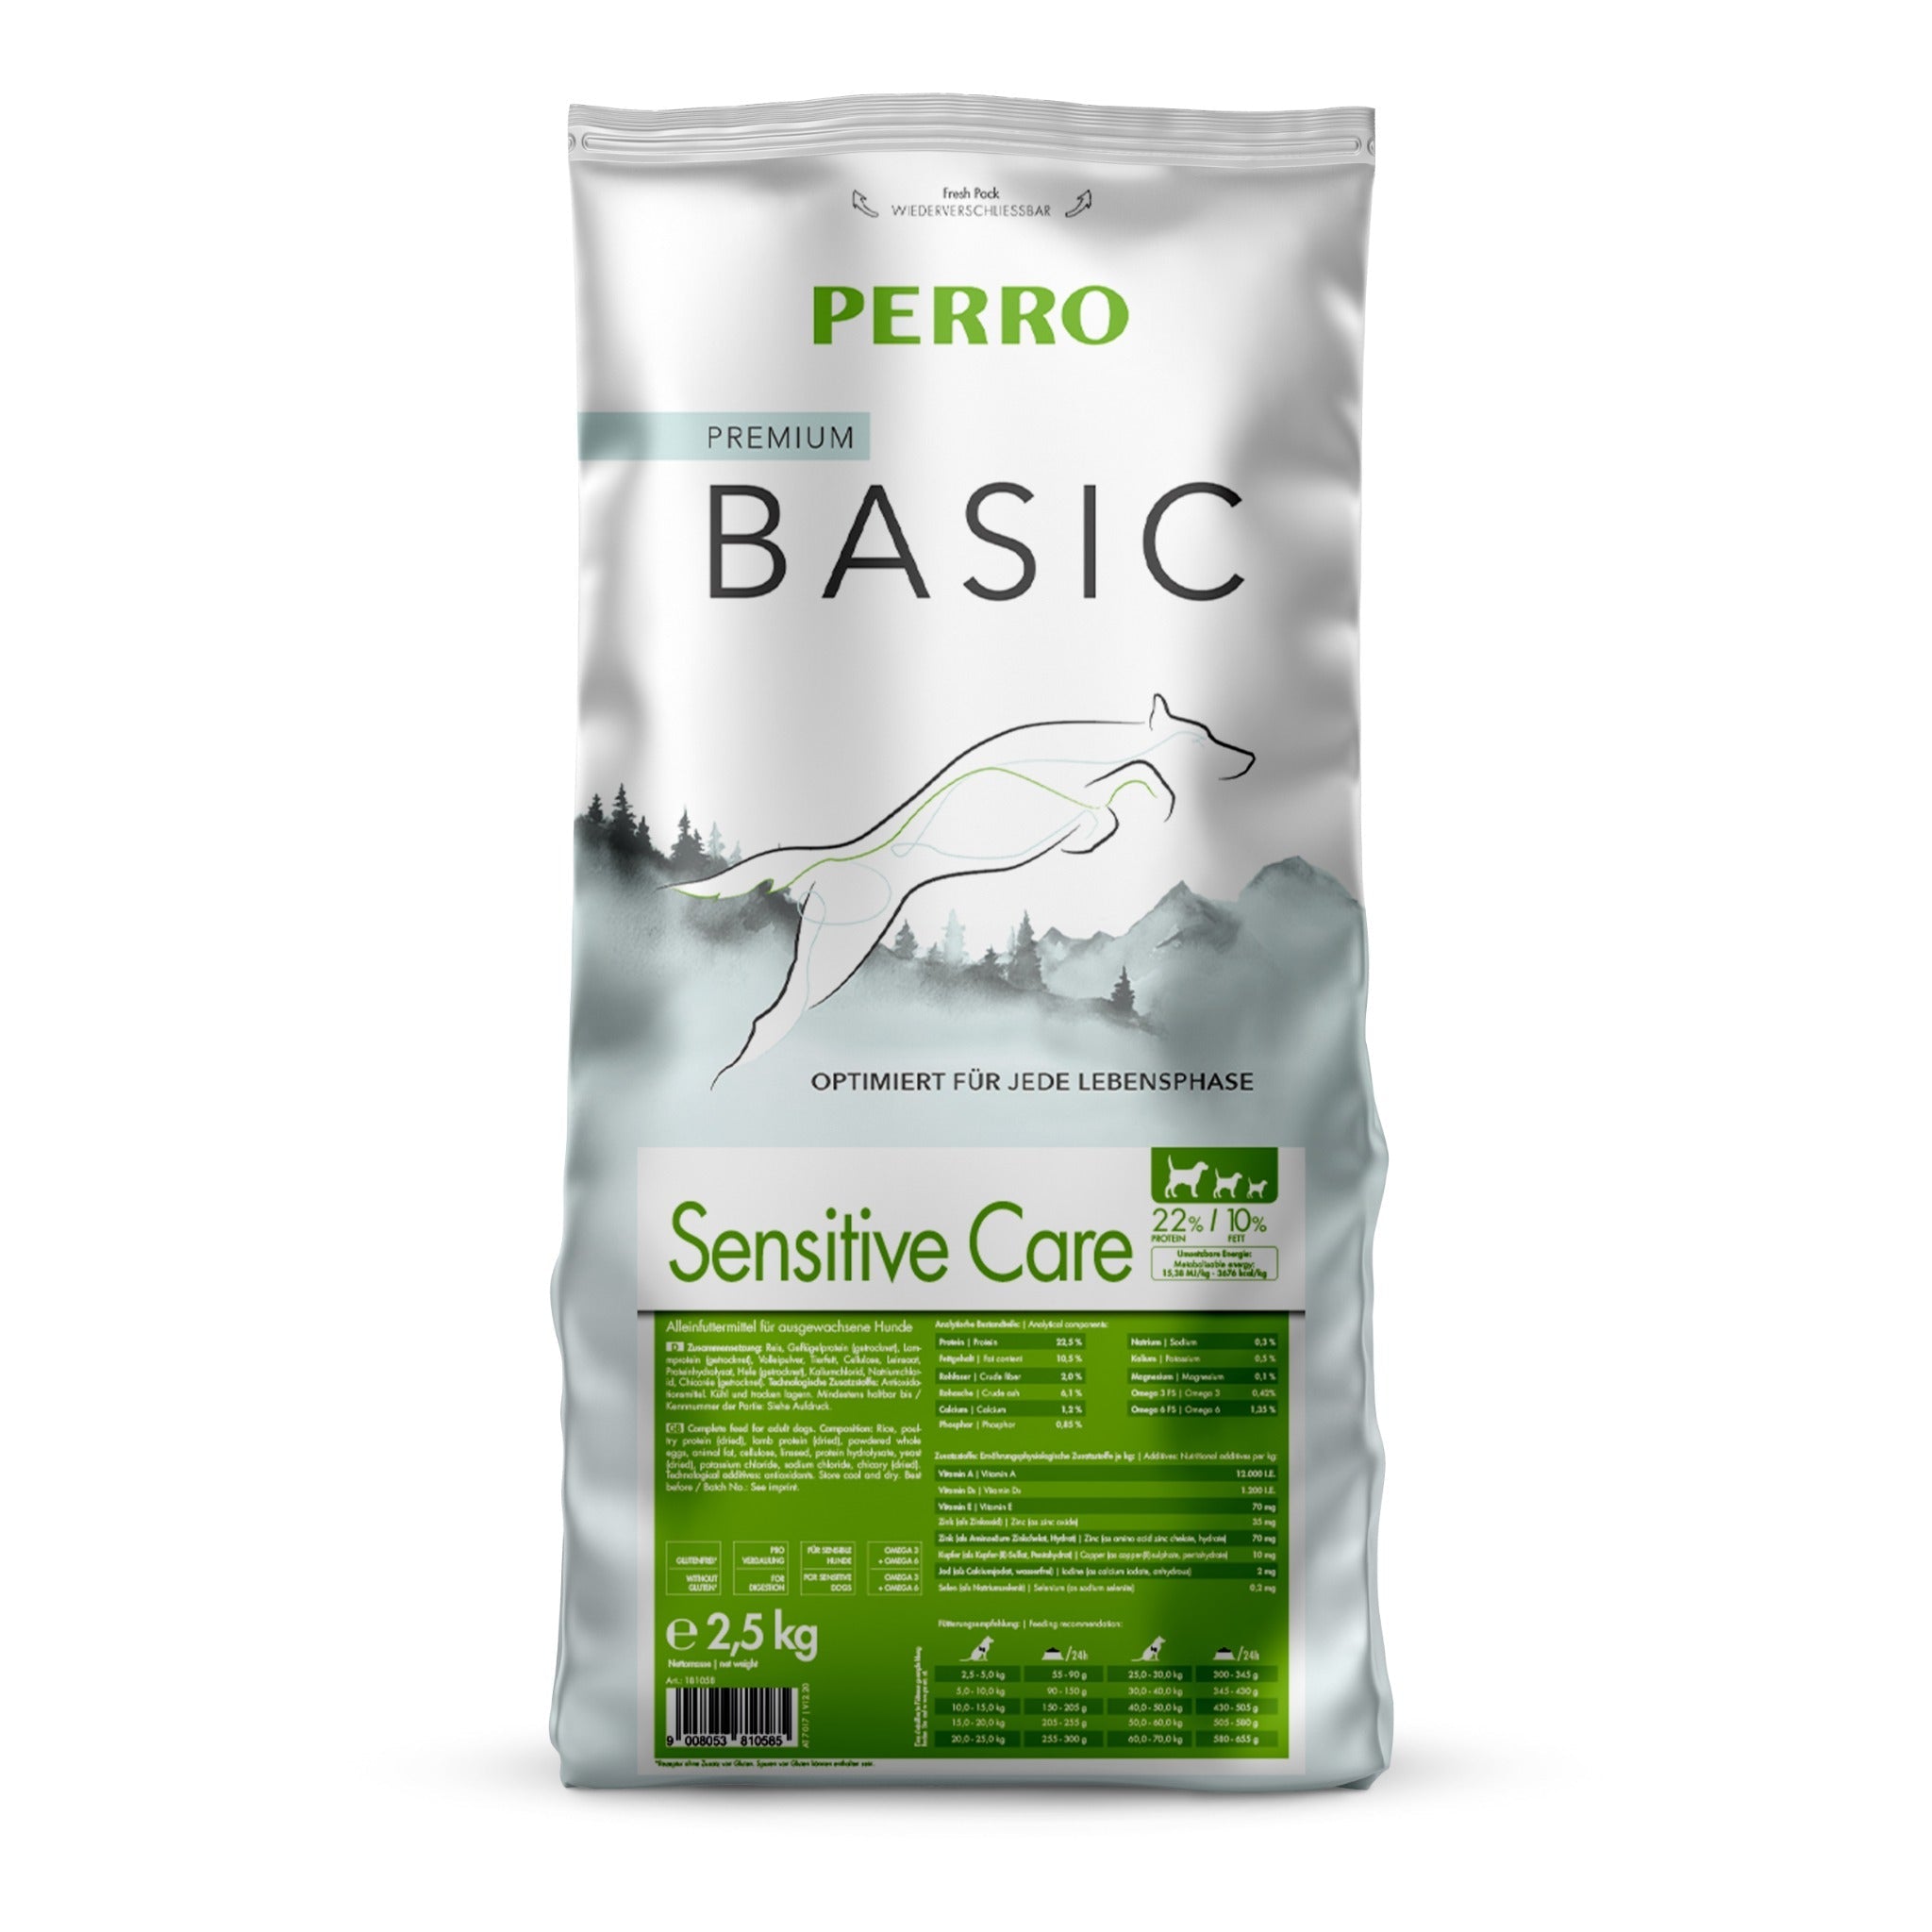 Perro Basic Sensitive Care - Hunde Trockenfutter - Woofshack